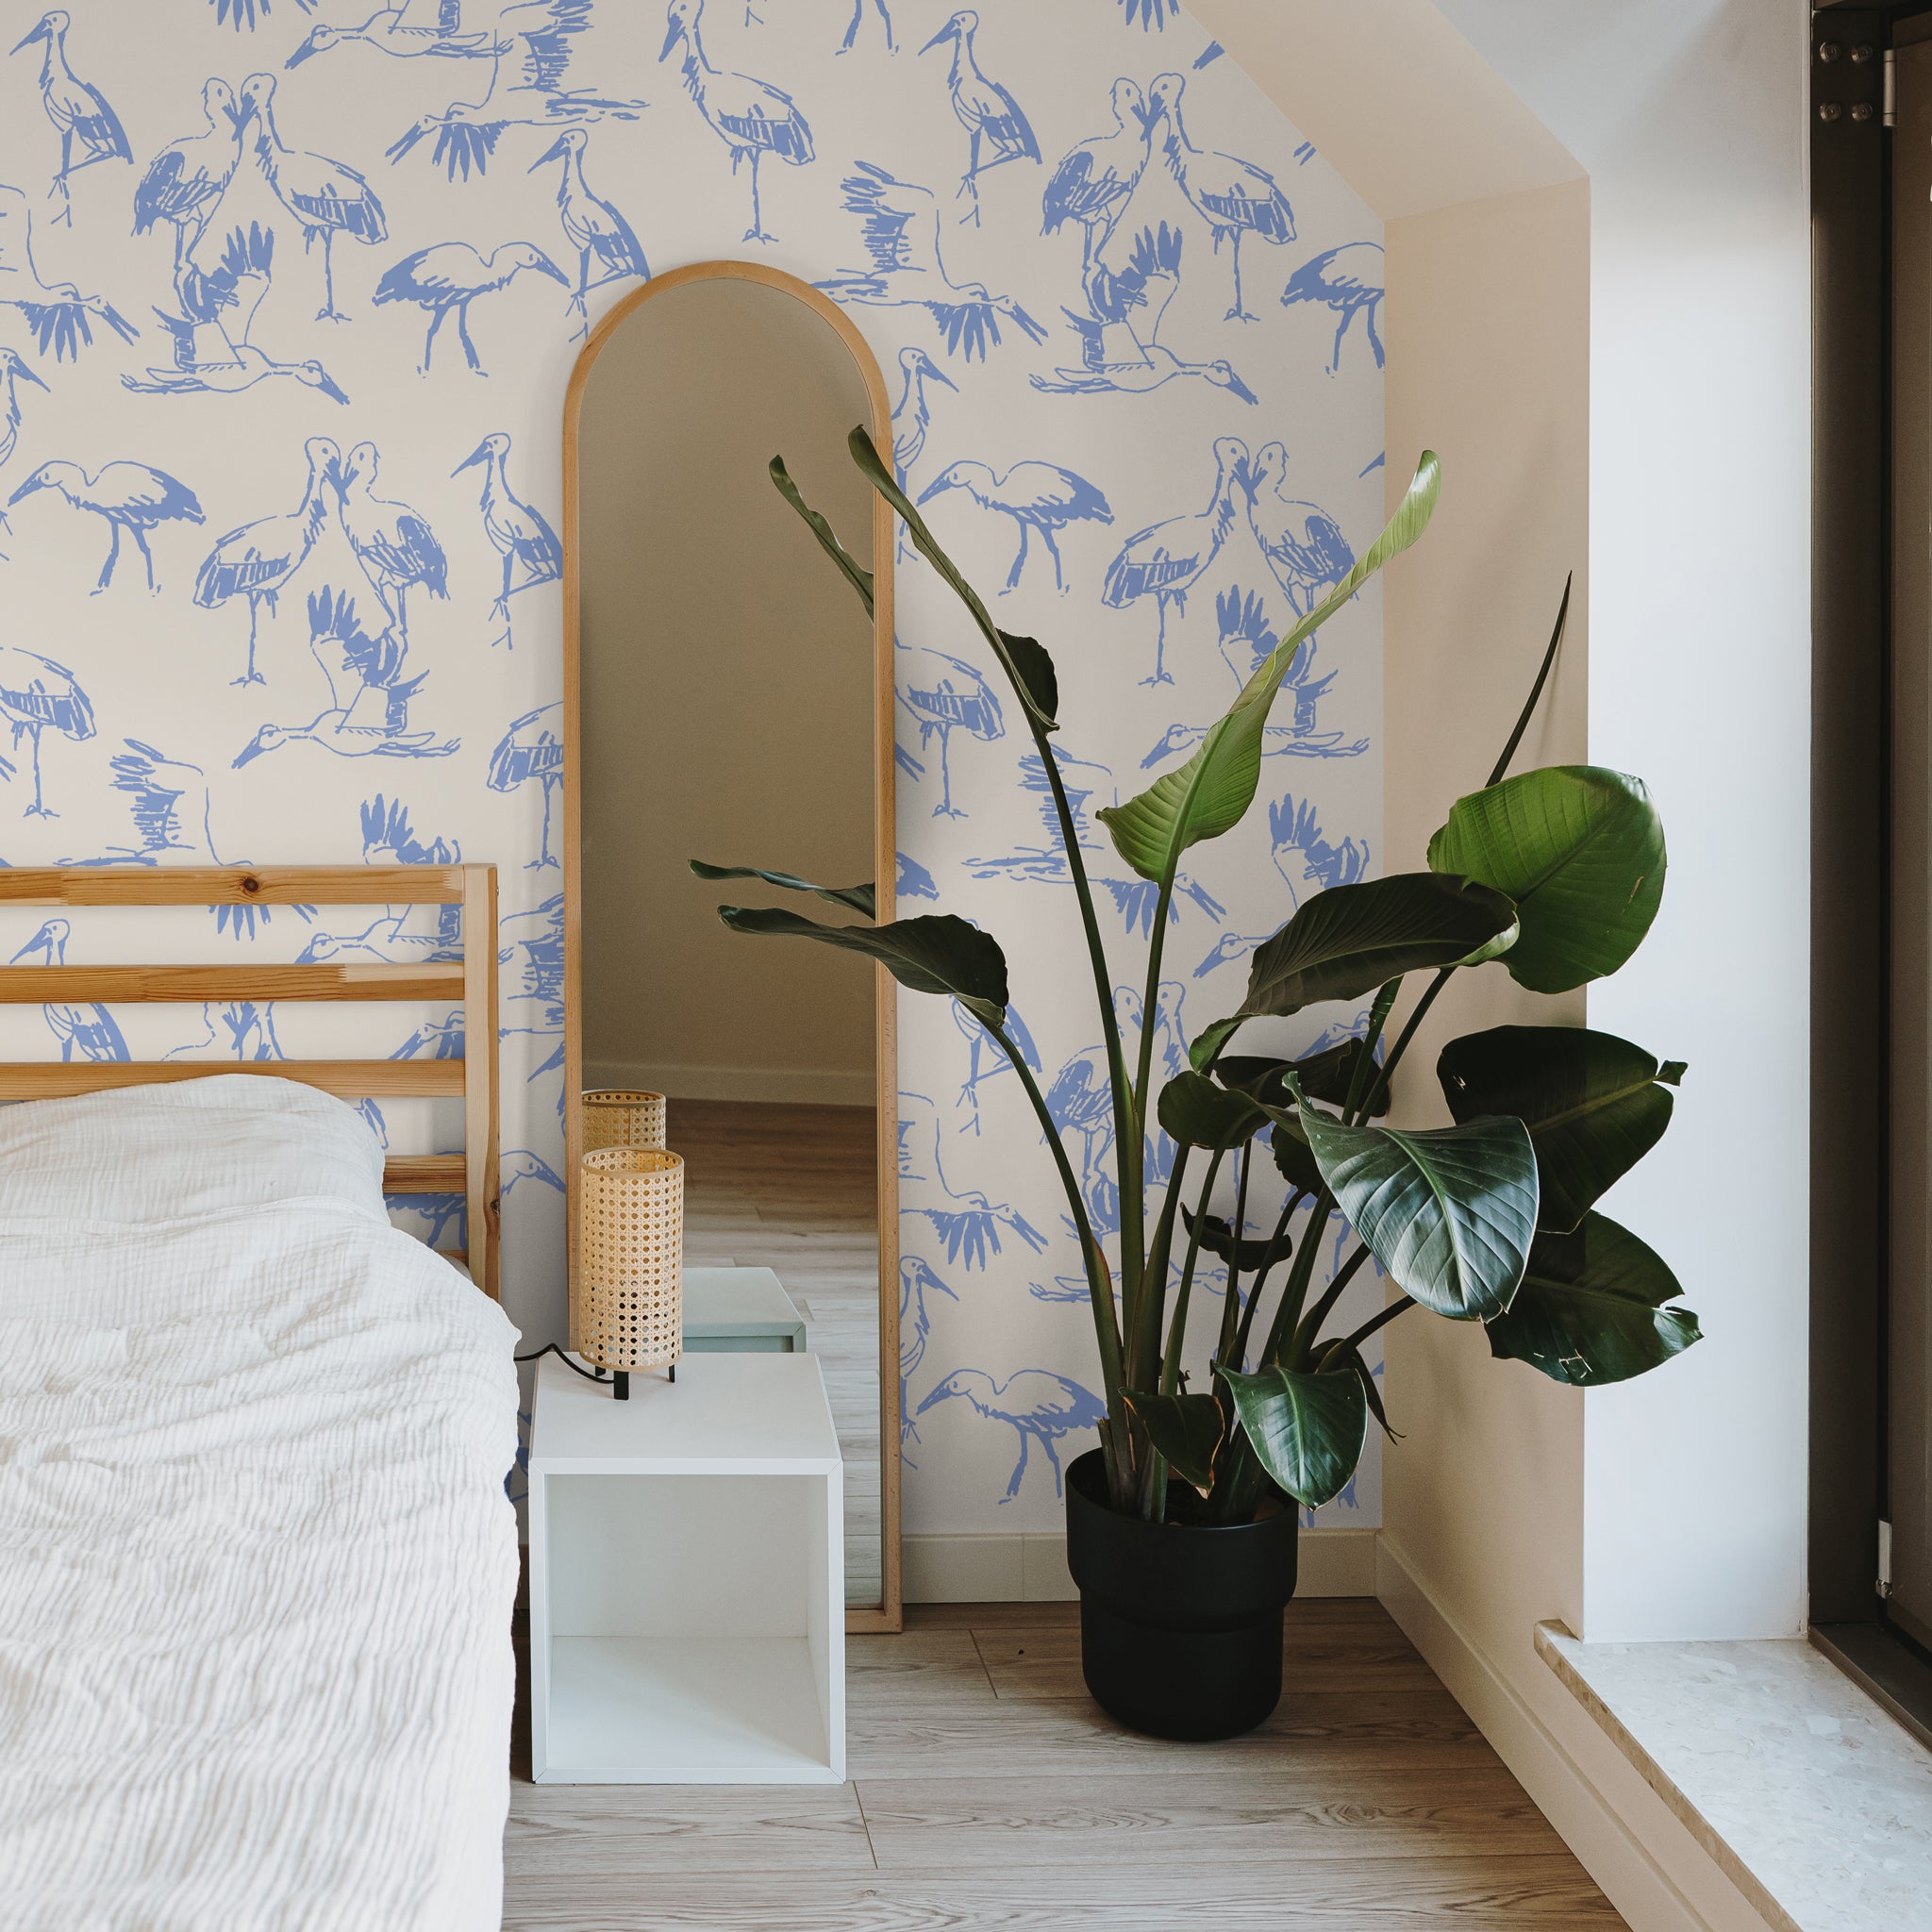 "Wall Blush's Matteo and Malena Wallpaper in a stylish bedroom setting, showcasing vibrant bird patterns."